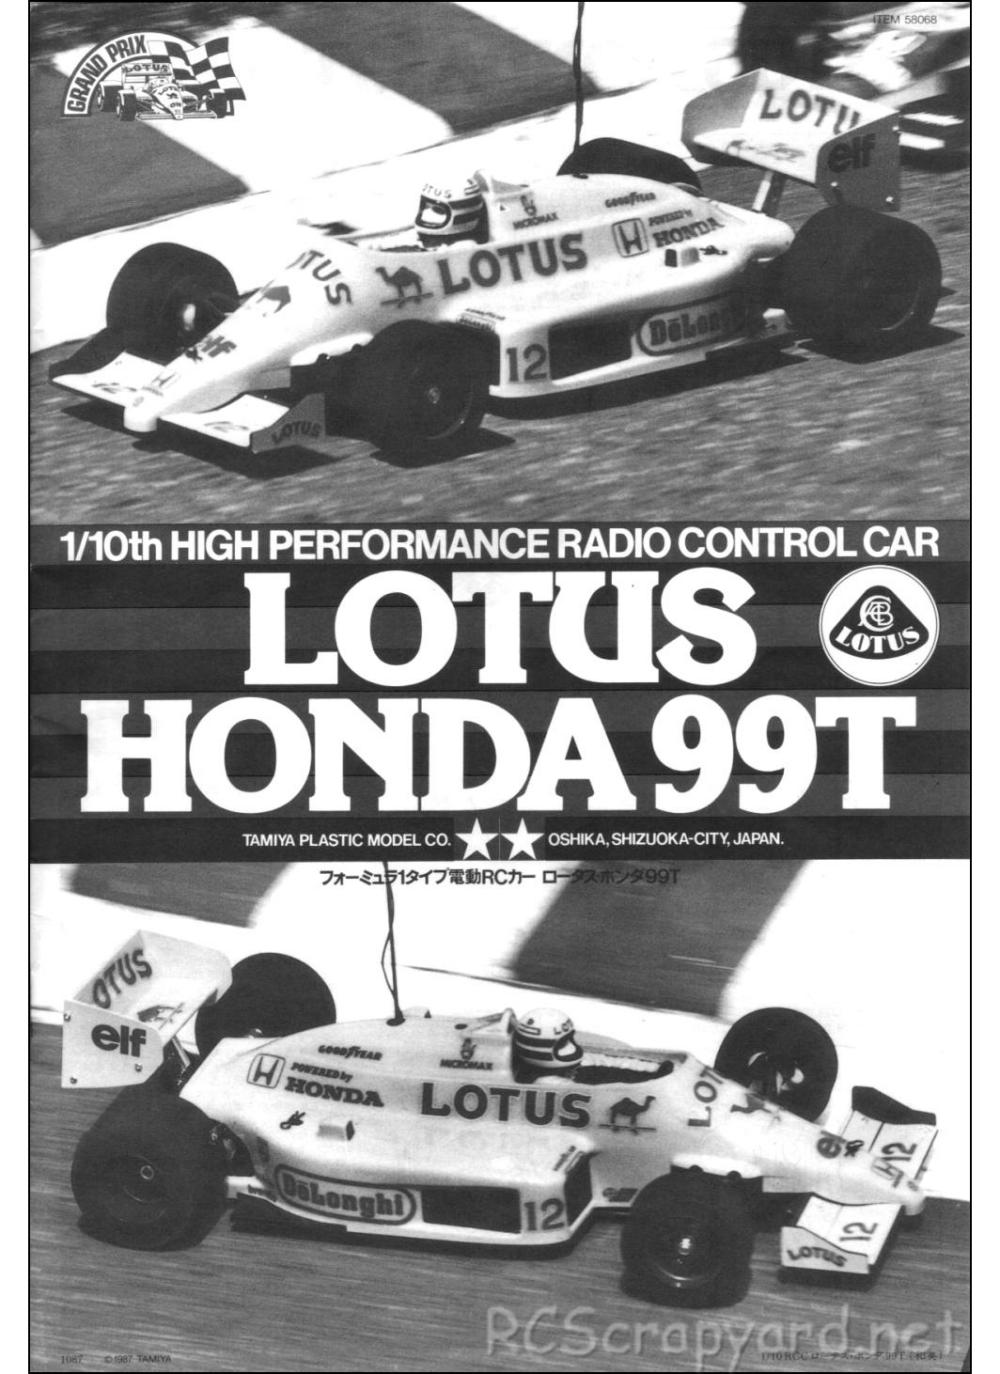 Tamiya - Lotus Honda 99T - 58068 - Manual